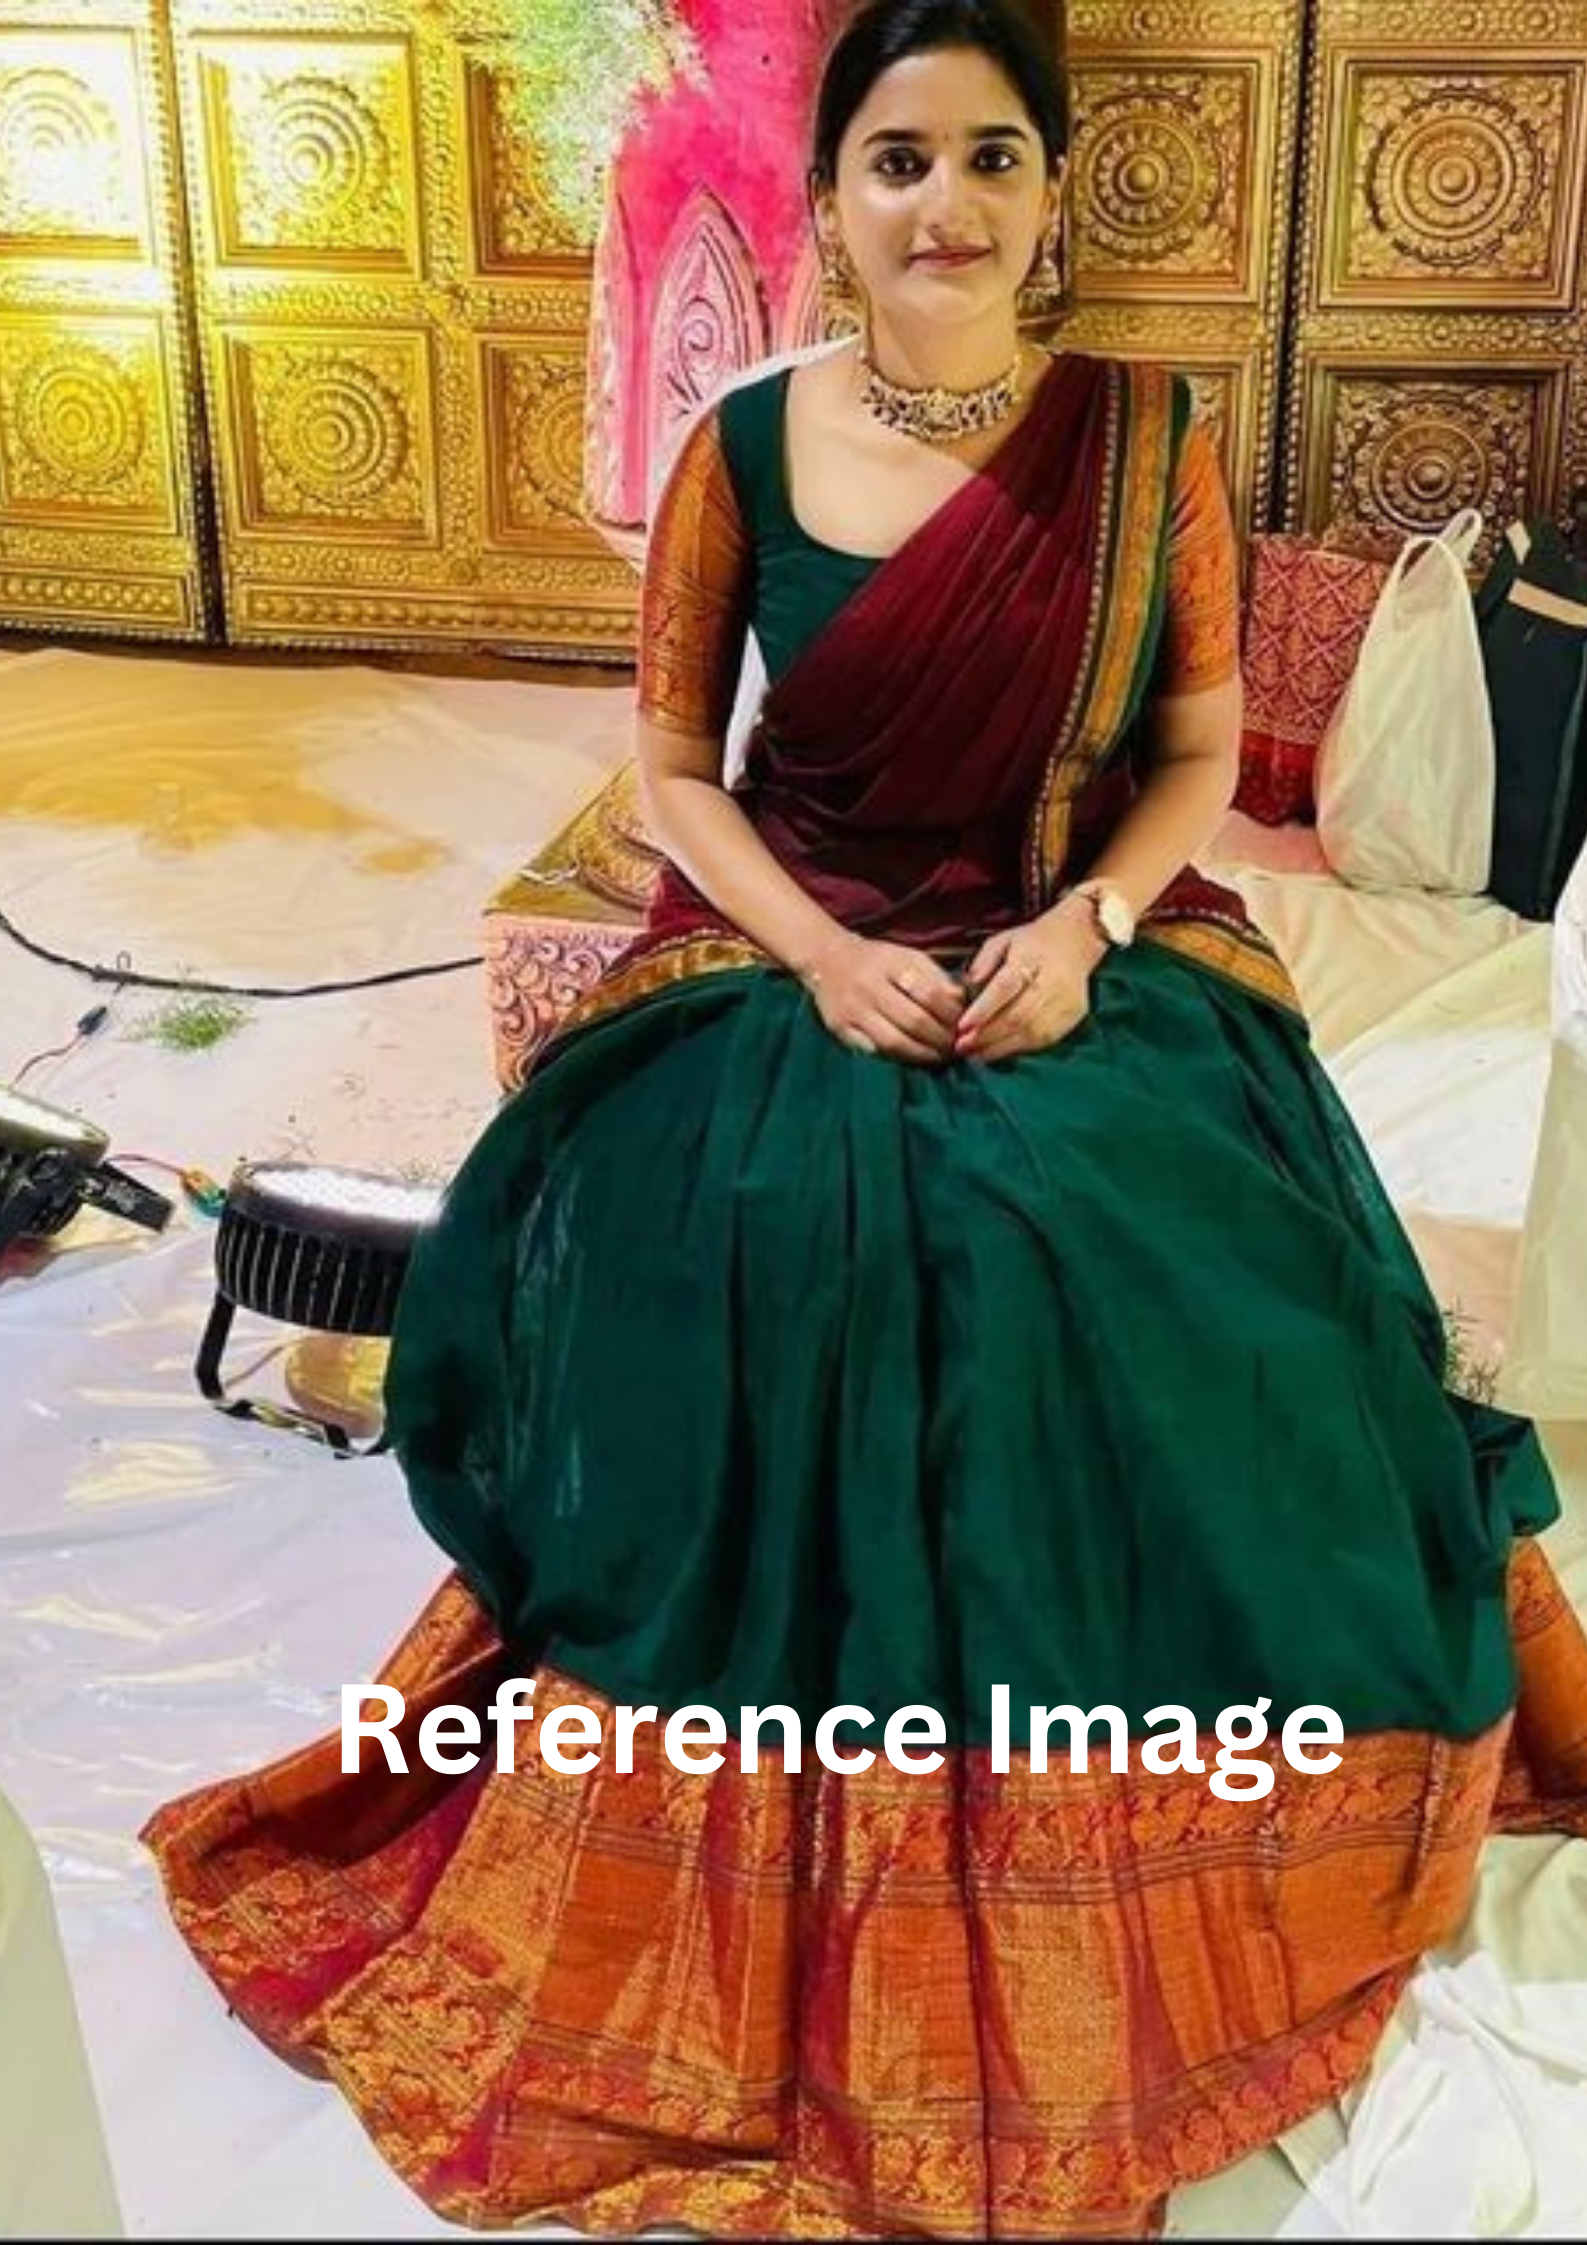 Buy Kerala Style Half Saree Designs New Model